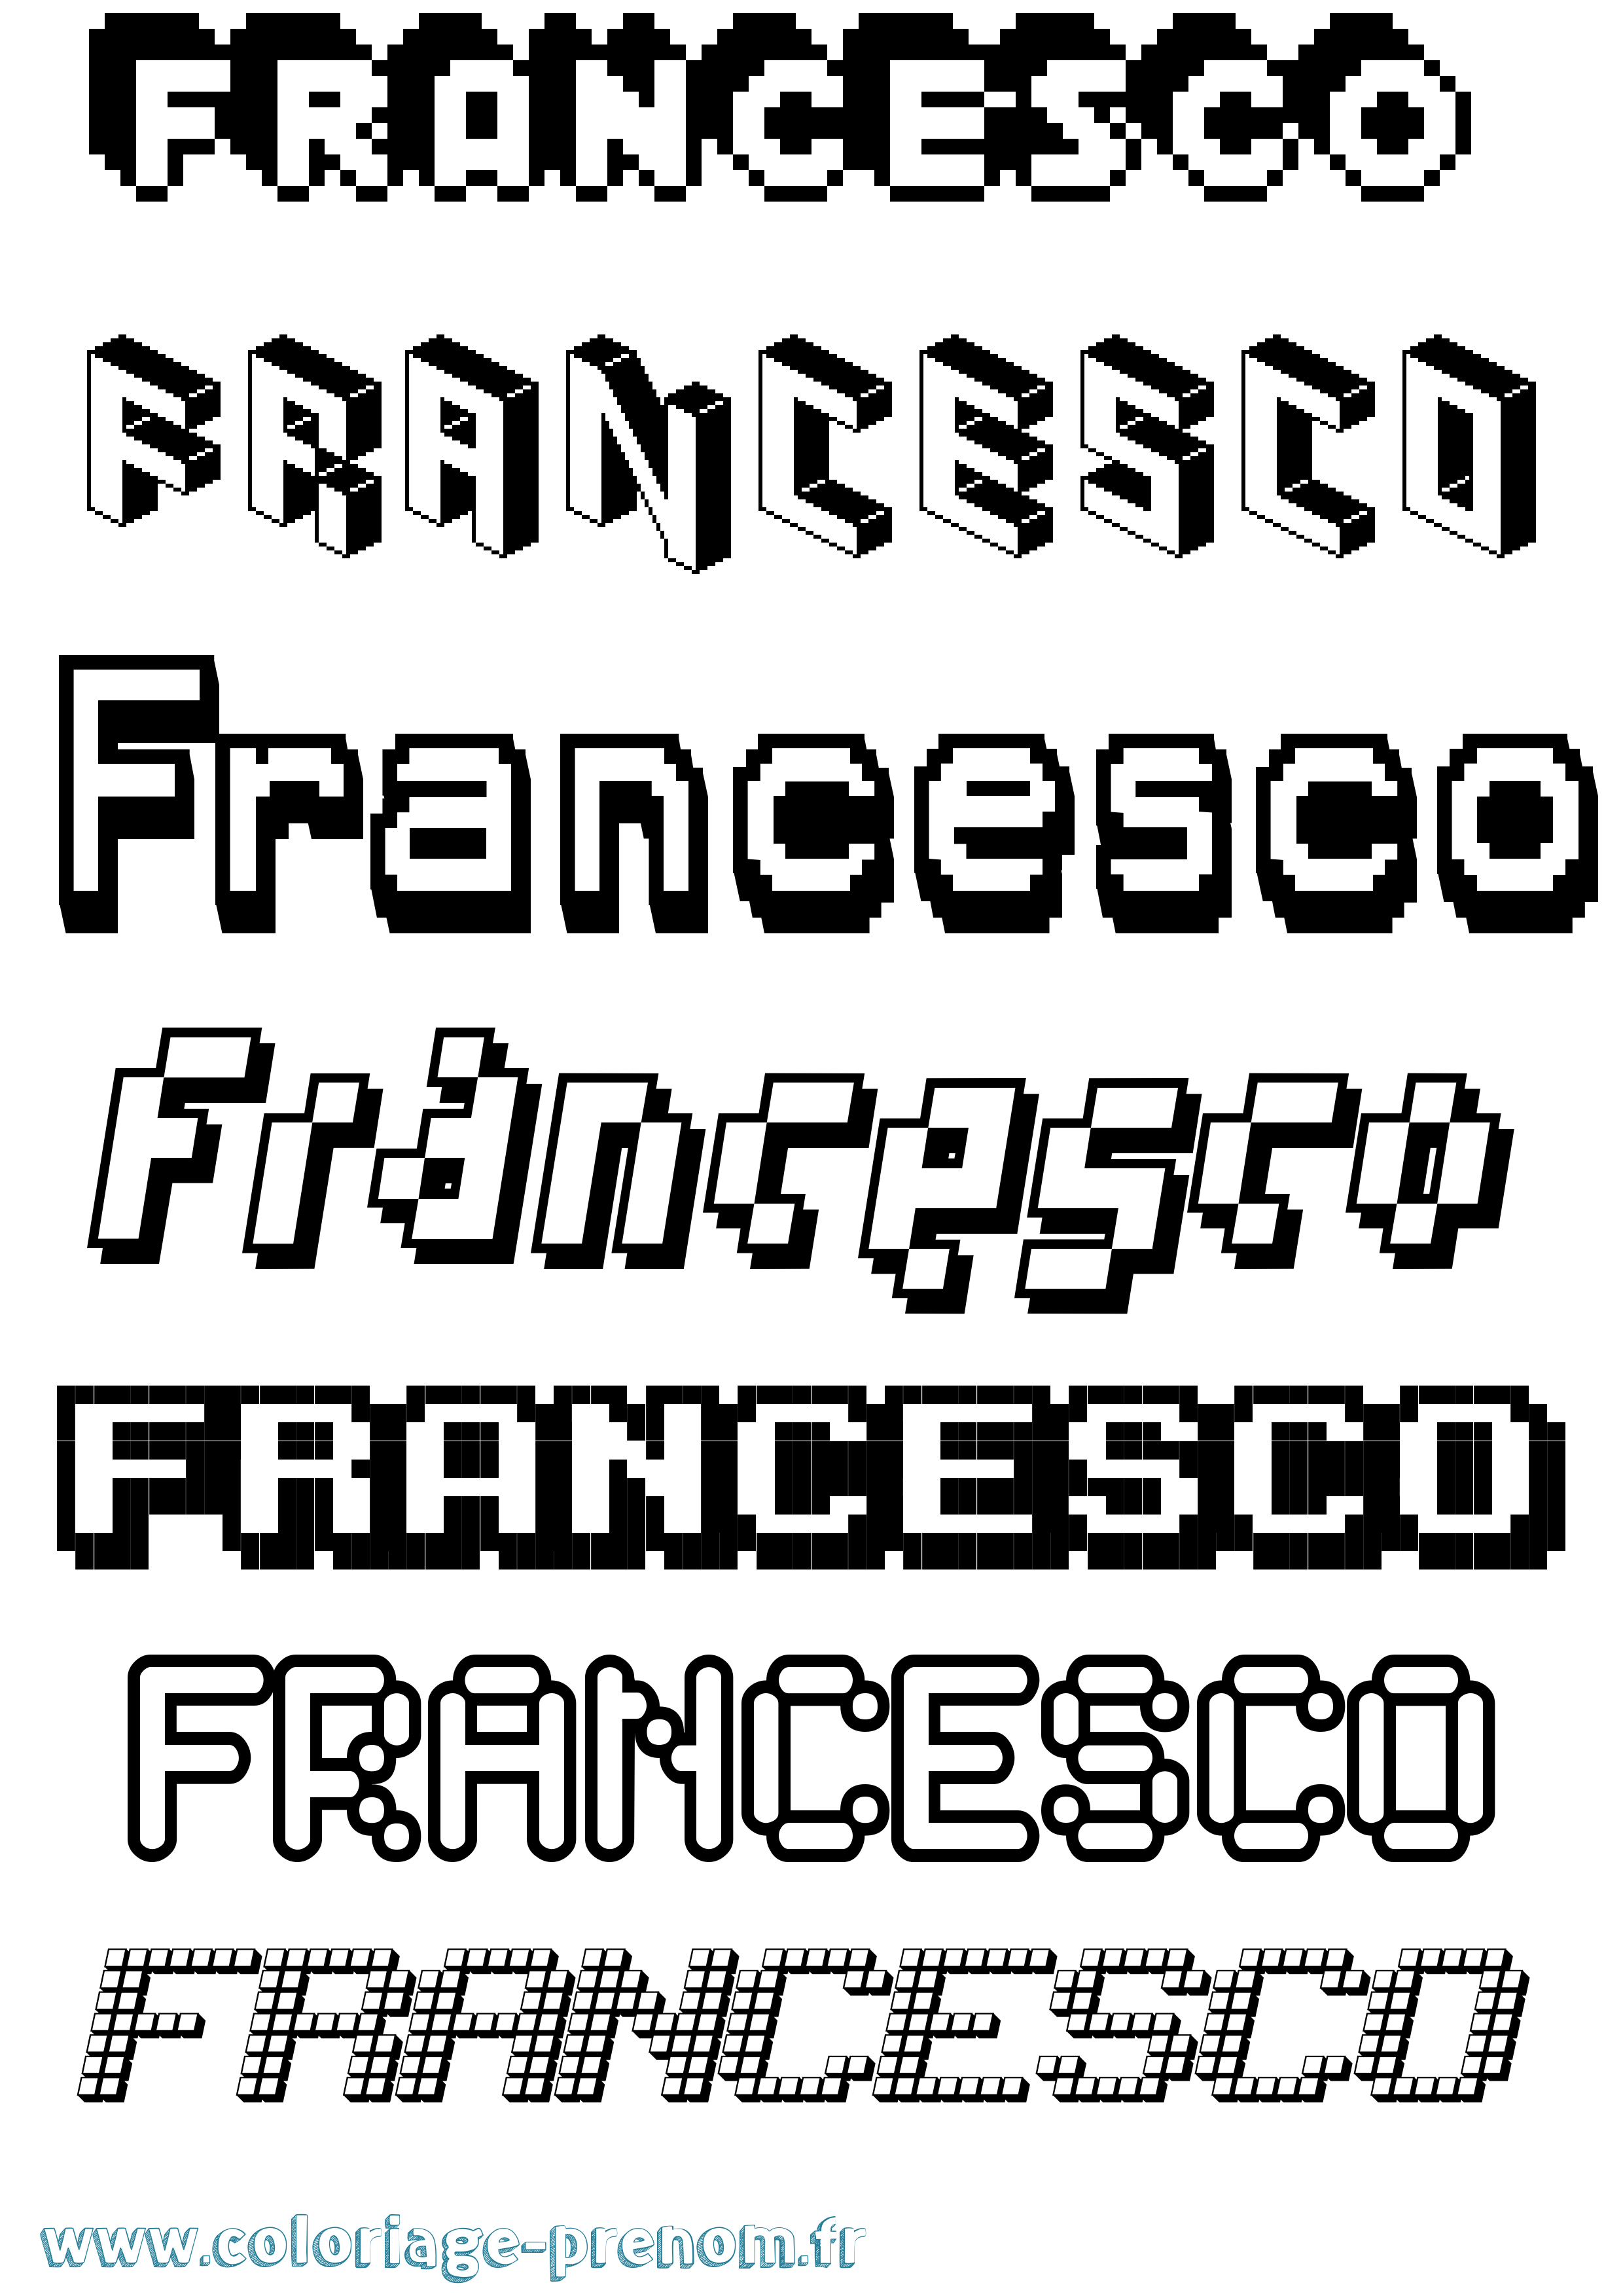 Coloriage prénom Francesco Pixel